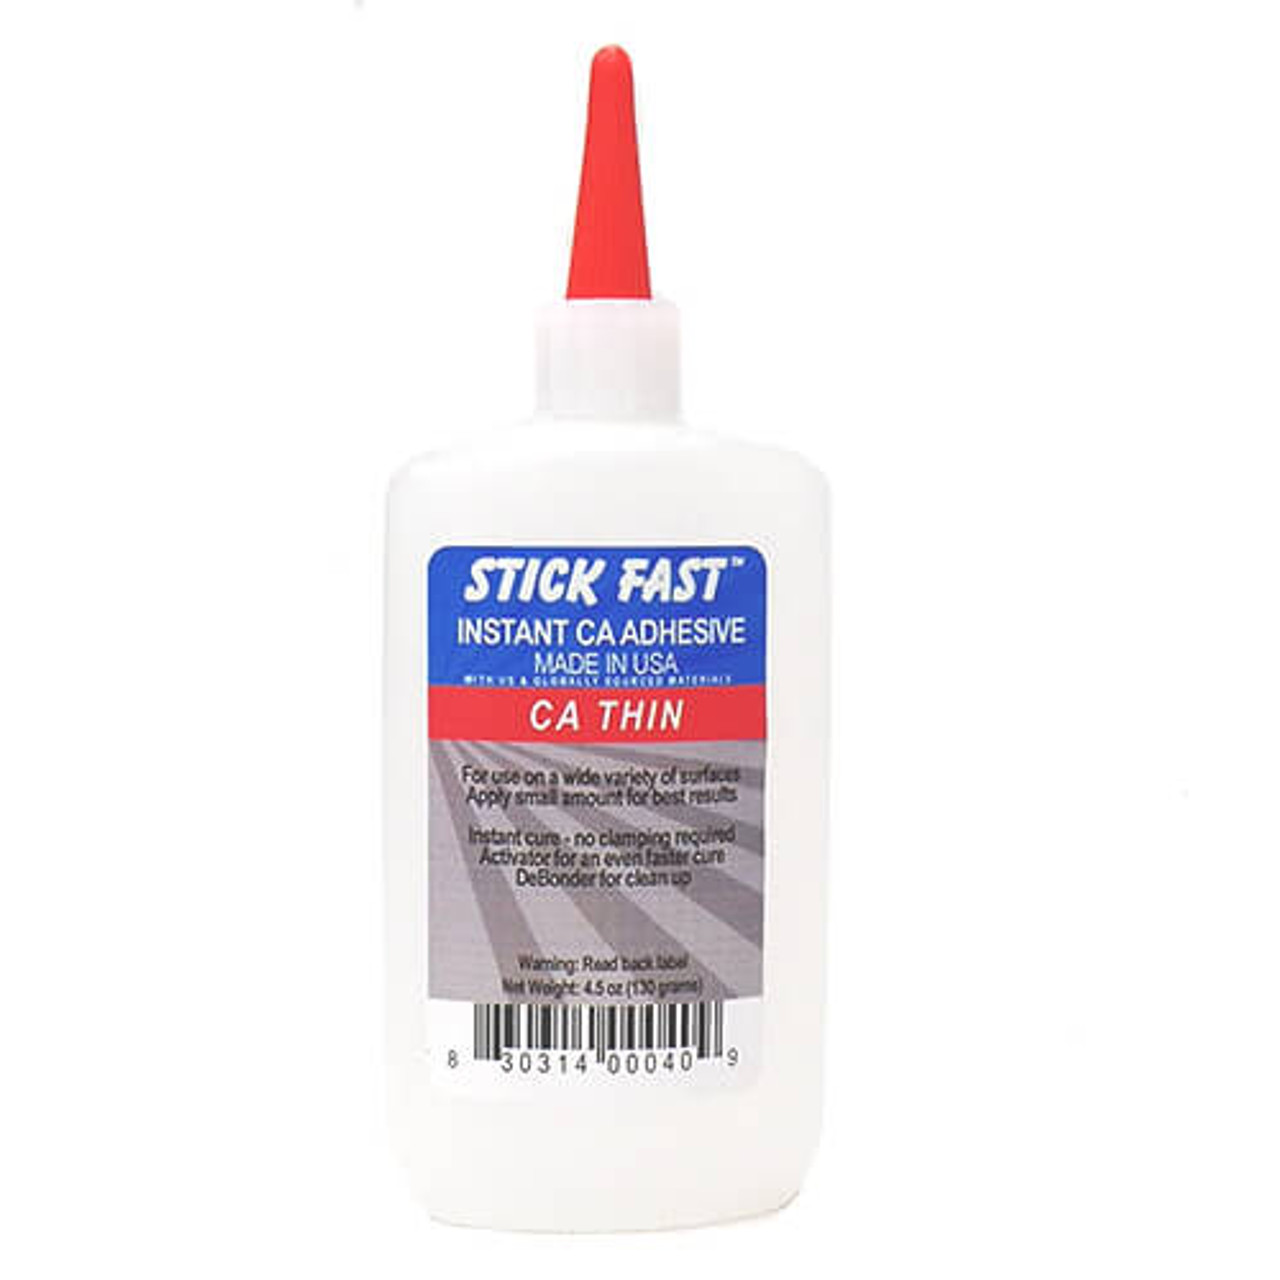 Stick Fast Instant CA Adhesive Glue, Thin Viscosity, 4.5oz Bottle